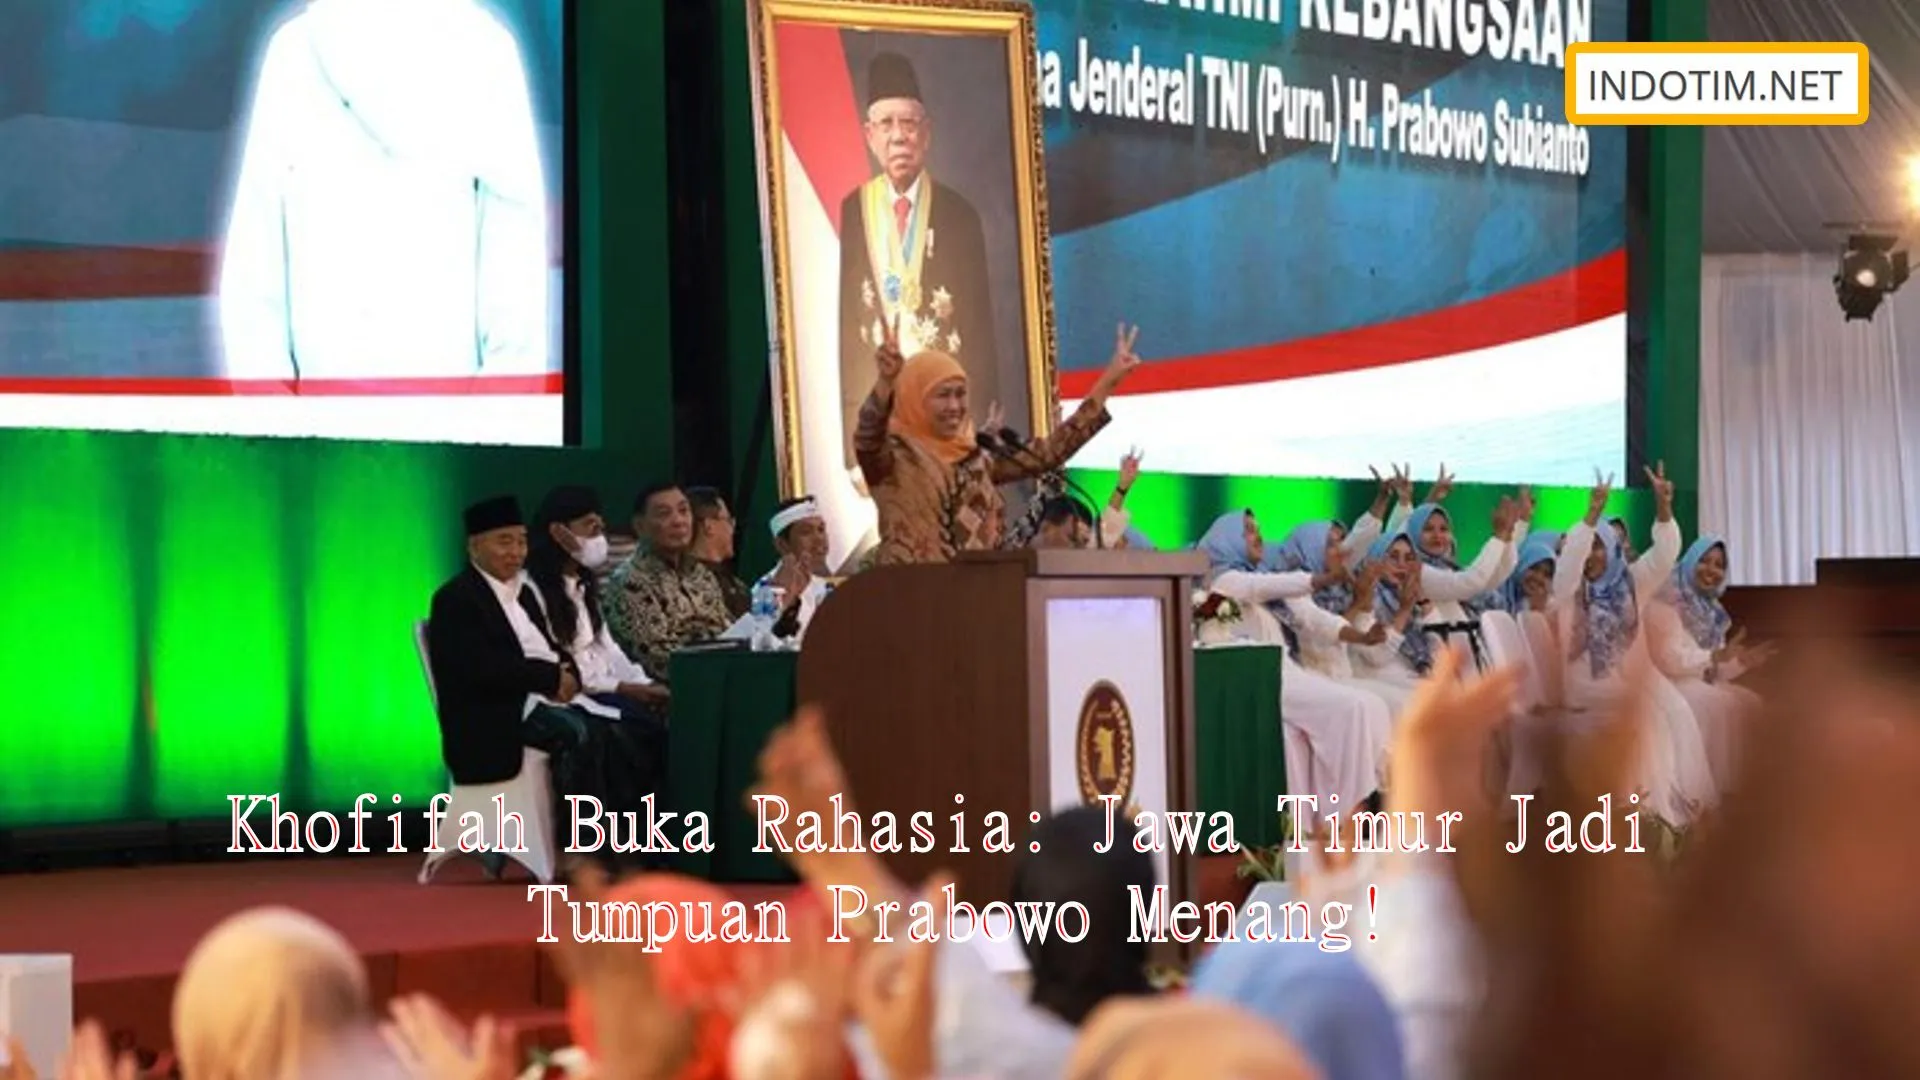 Khofifah Buka Rahasia: Jawa Timur Jadi Tumpuan Prabowo Menang!